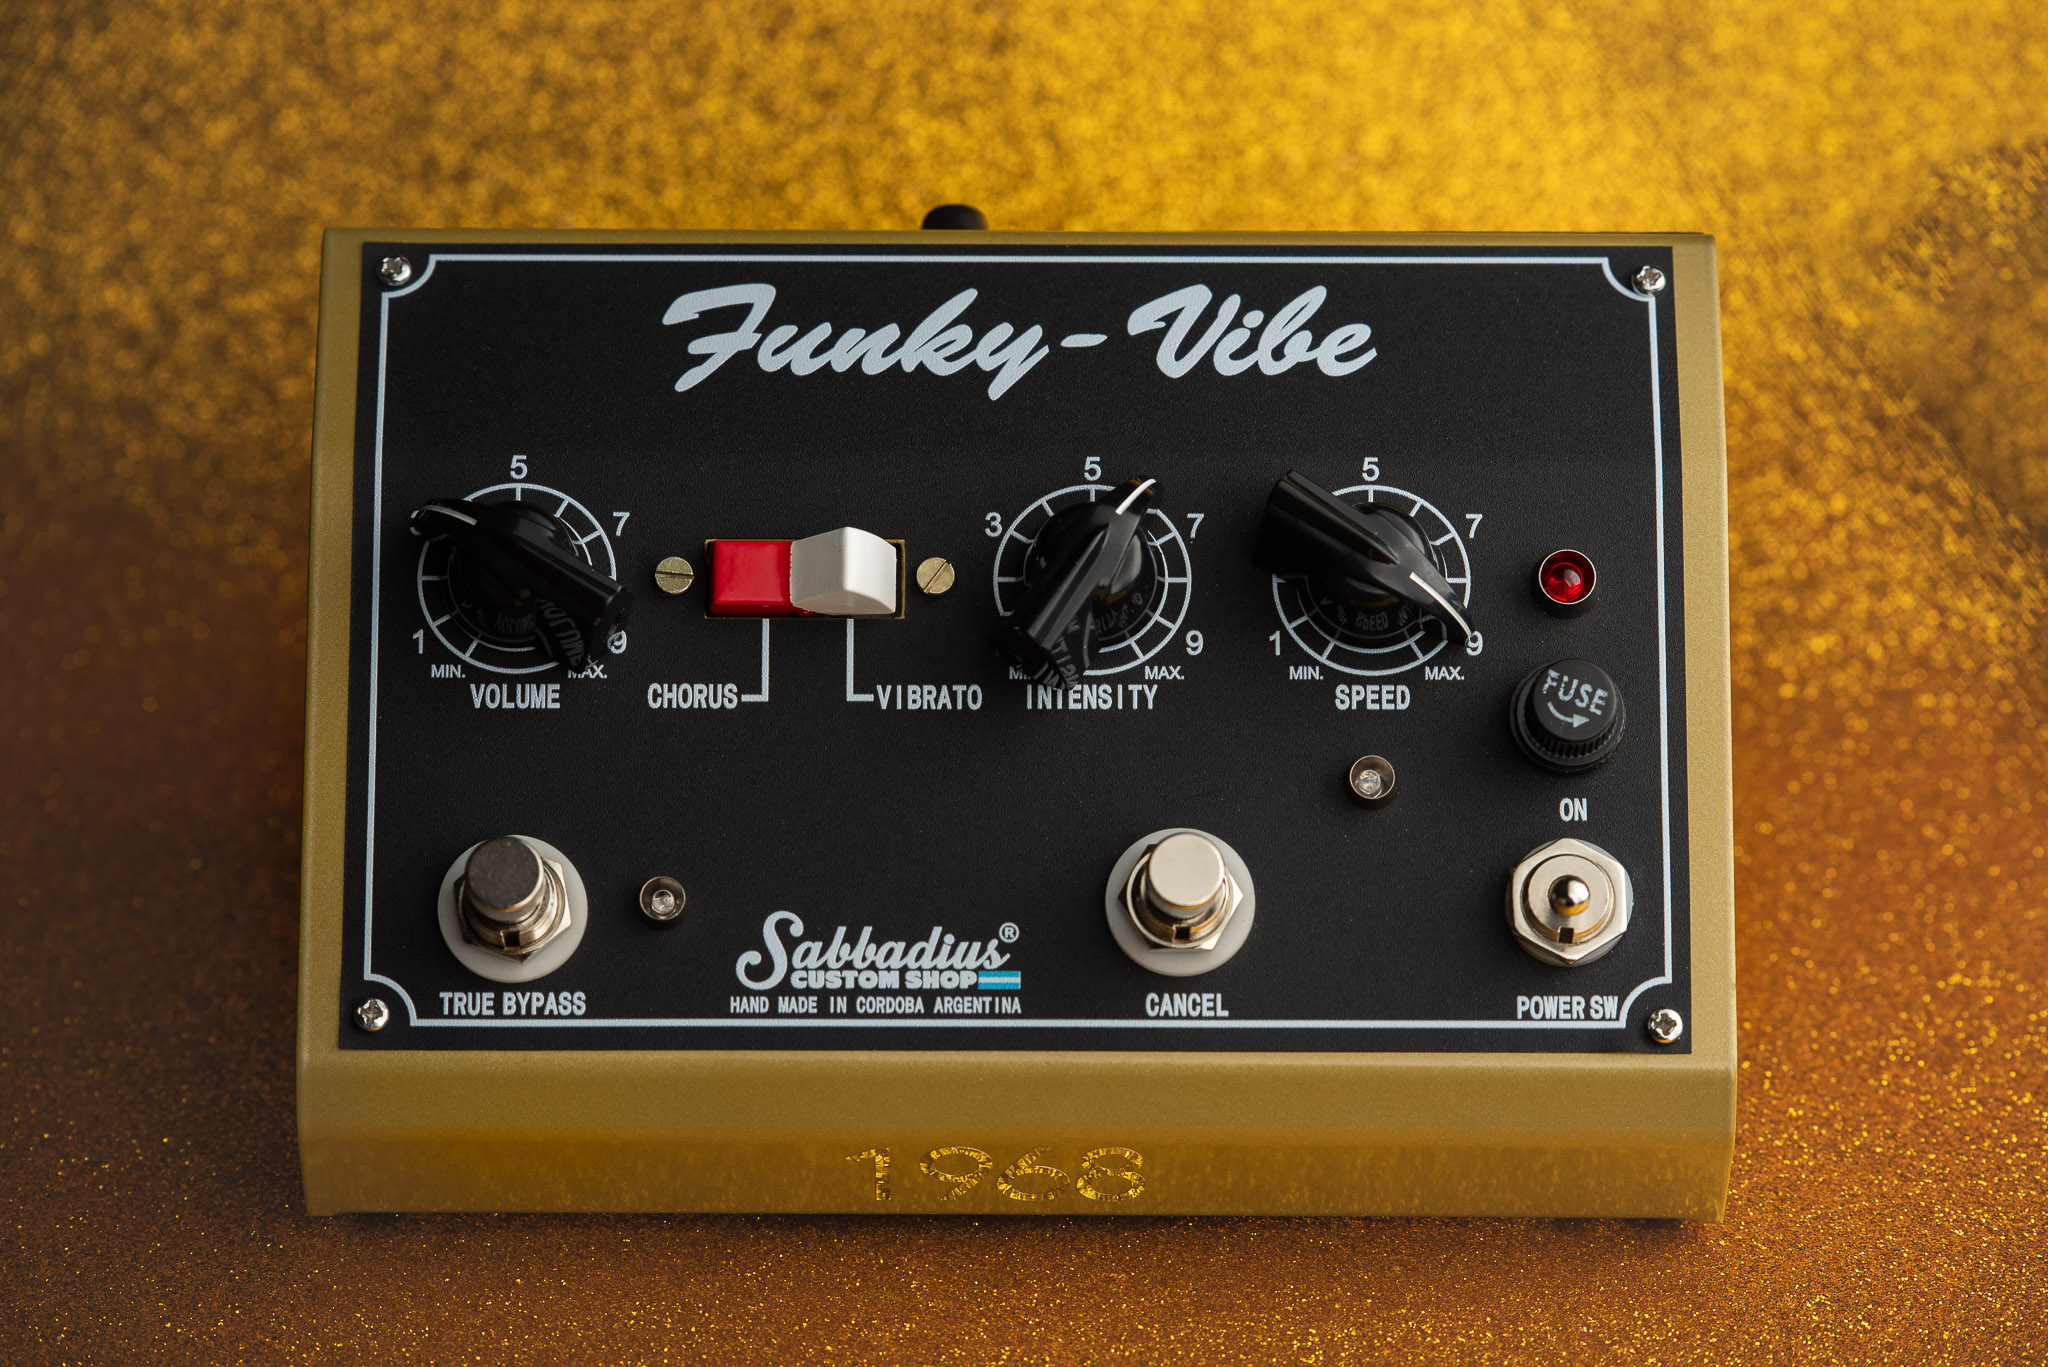 Funky-Vibe #1000 Series (Limited Edition) – SABBADIUS Electronics